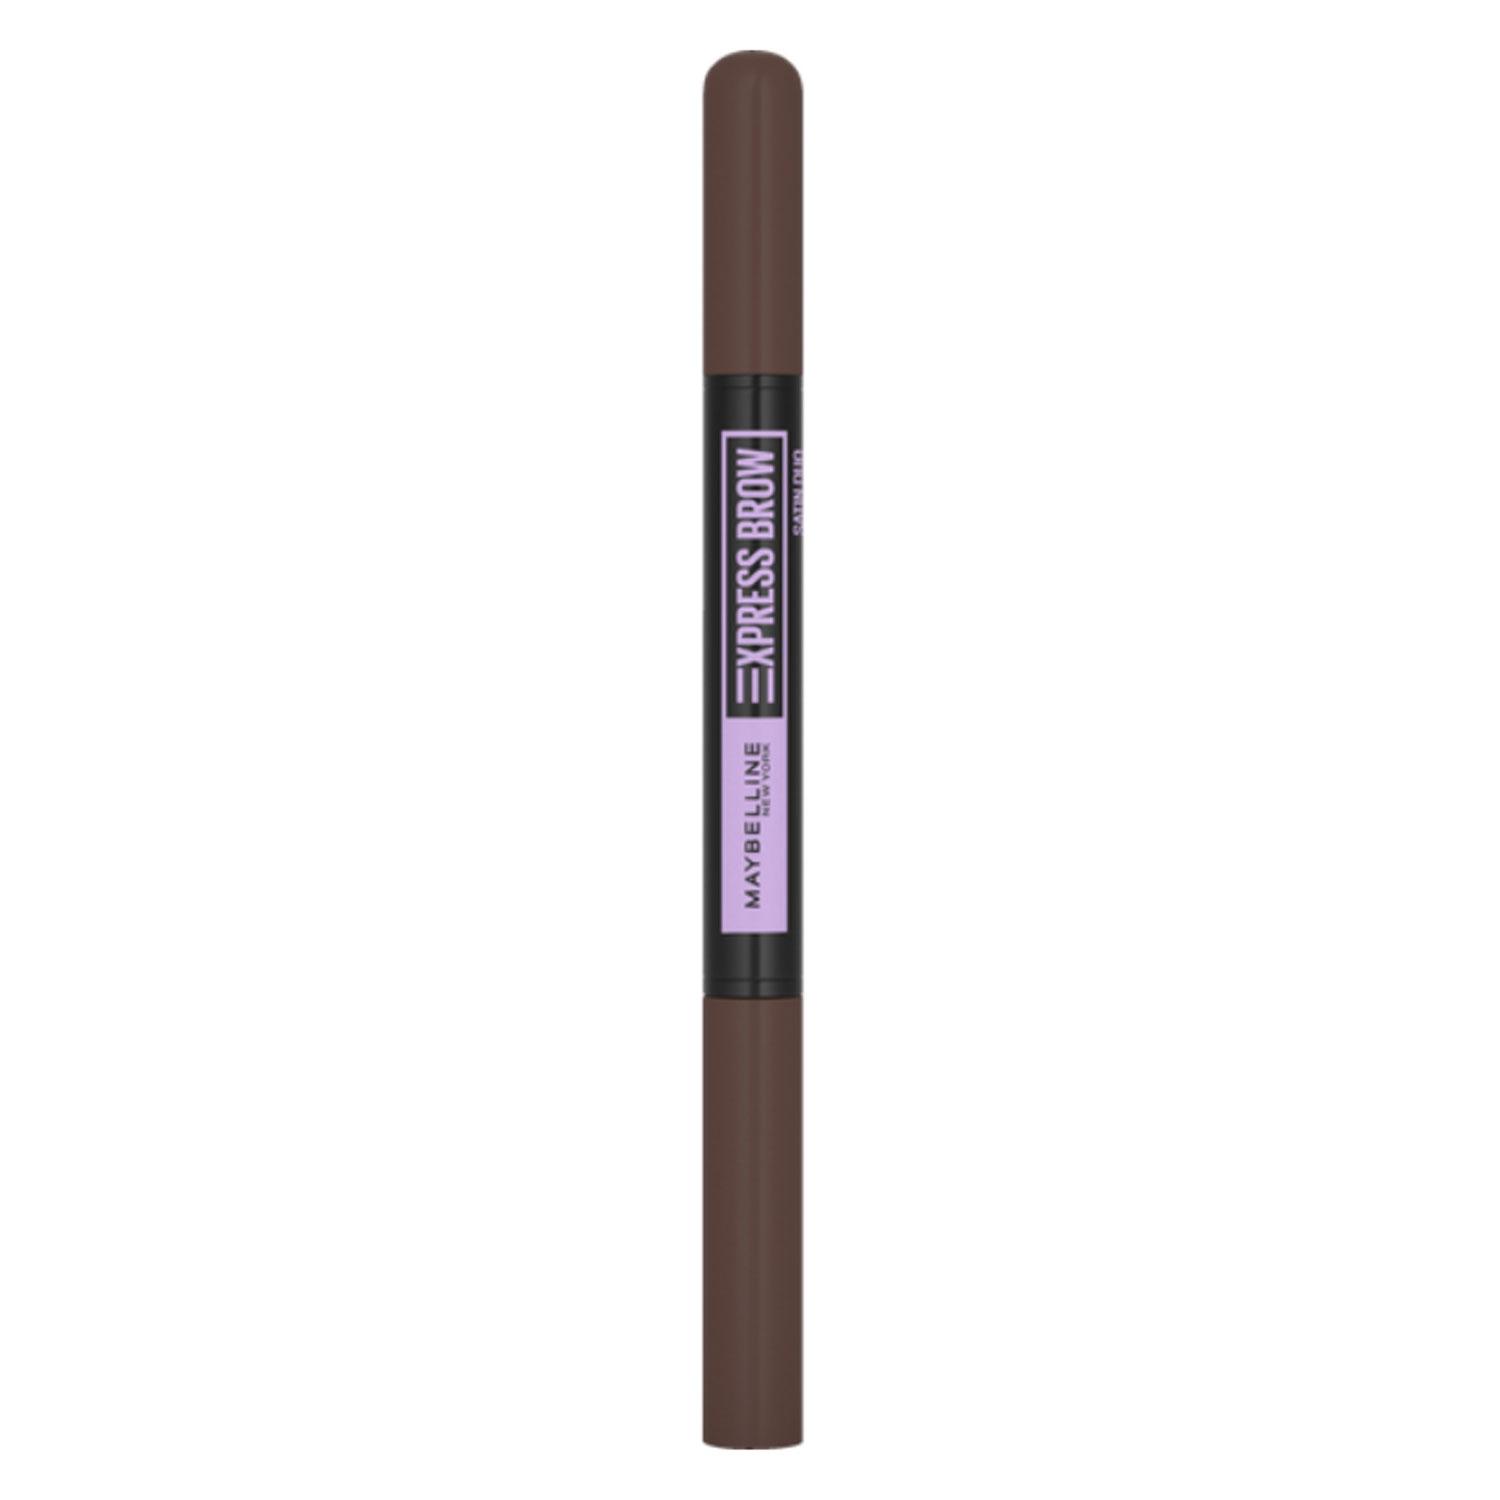 Maybelline NY Brows - Express Brow Satin Duo Eyebrow Pencil and Powder No. 04 Dark Brown